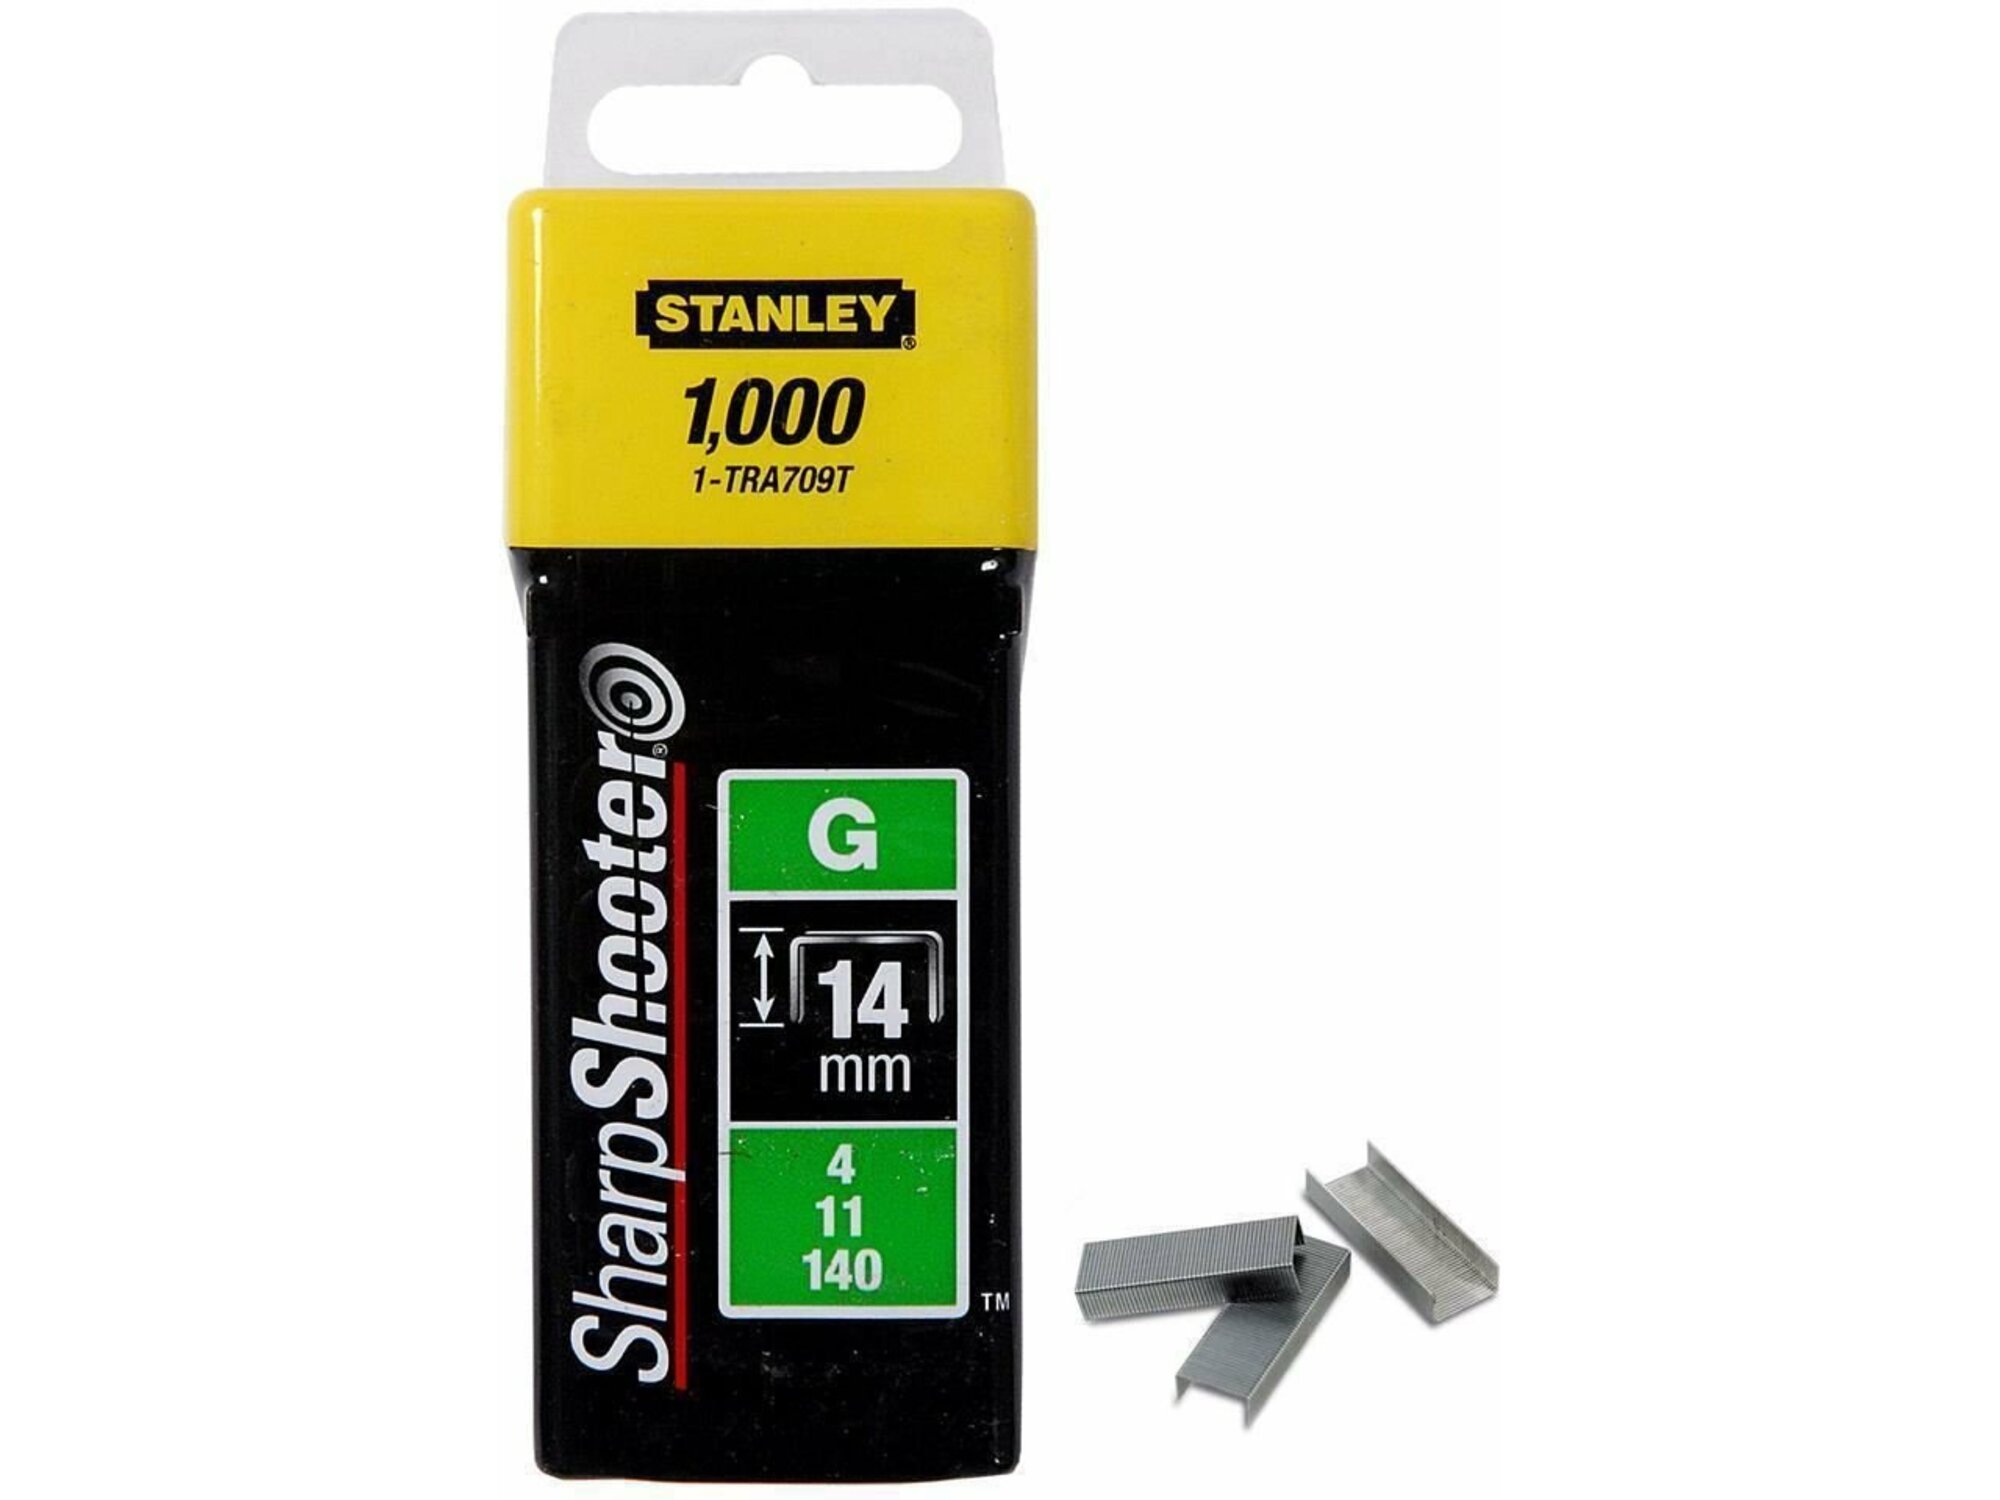 STANLEY sponke tip G 14mm 1000/1 1-TRA709T